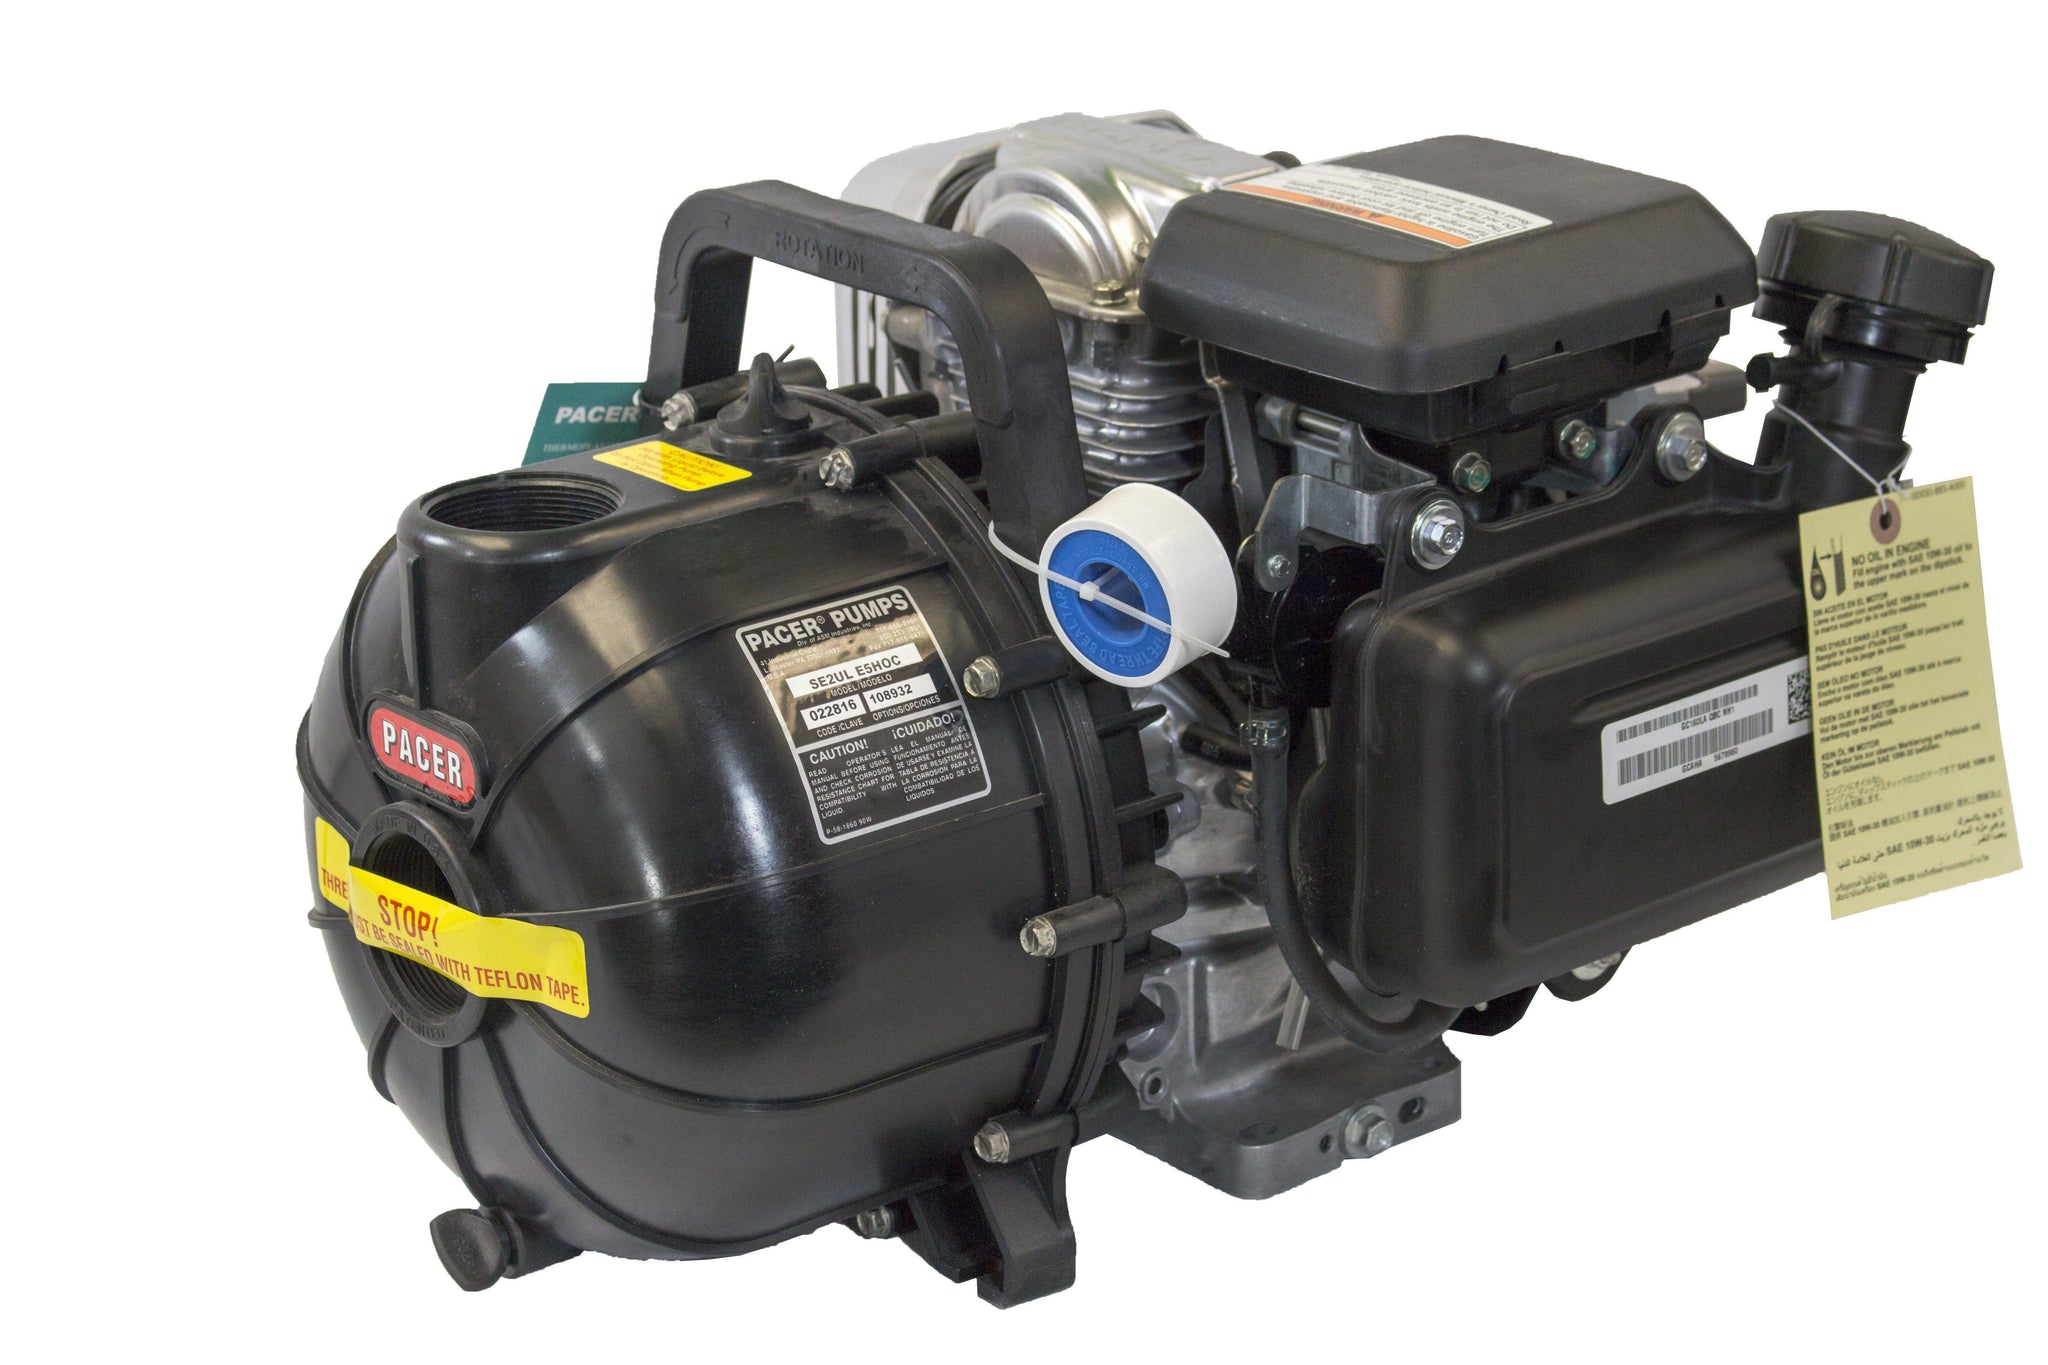 Pacer Pumps - 2" Pump Honda Engine